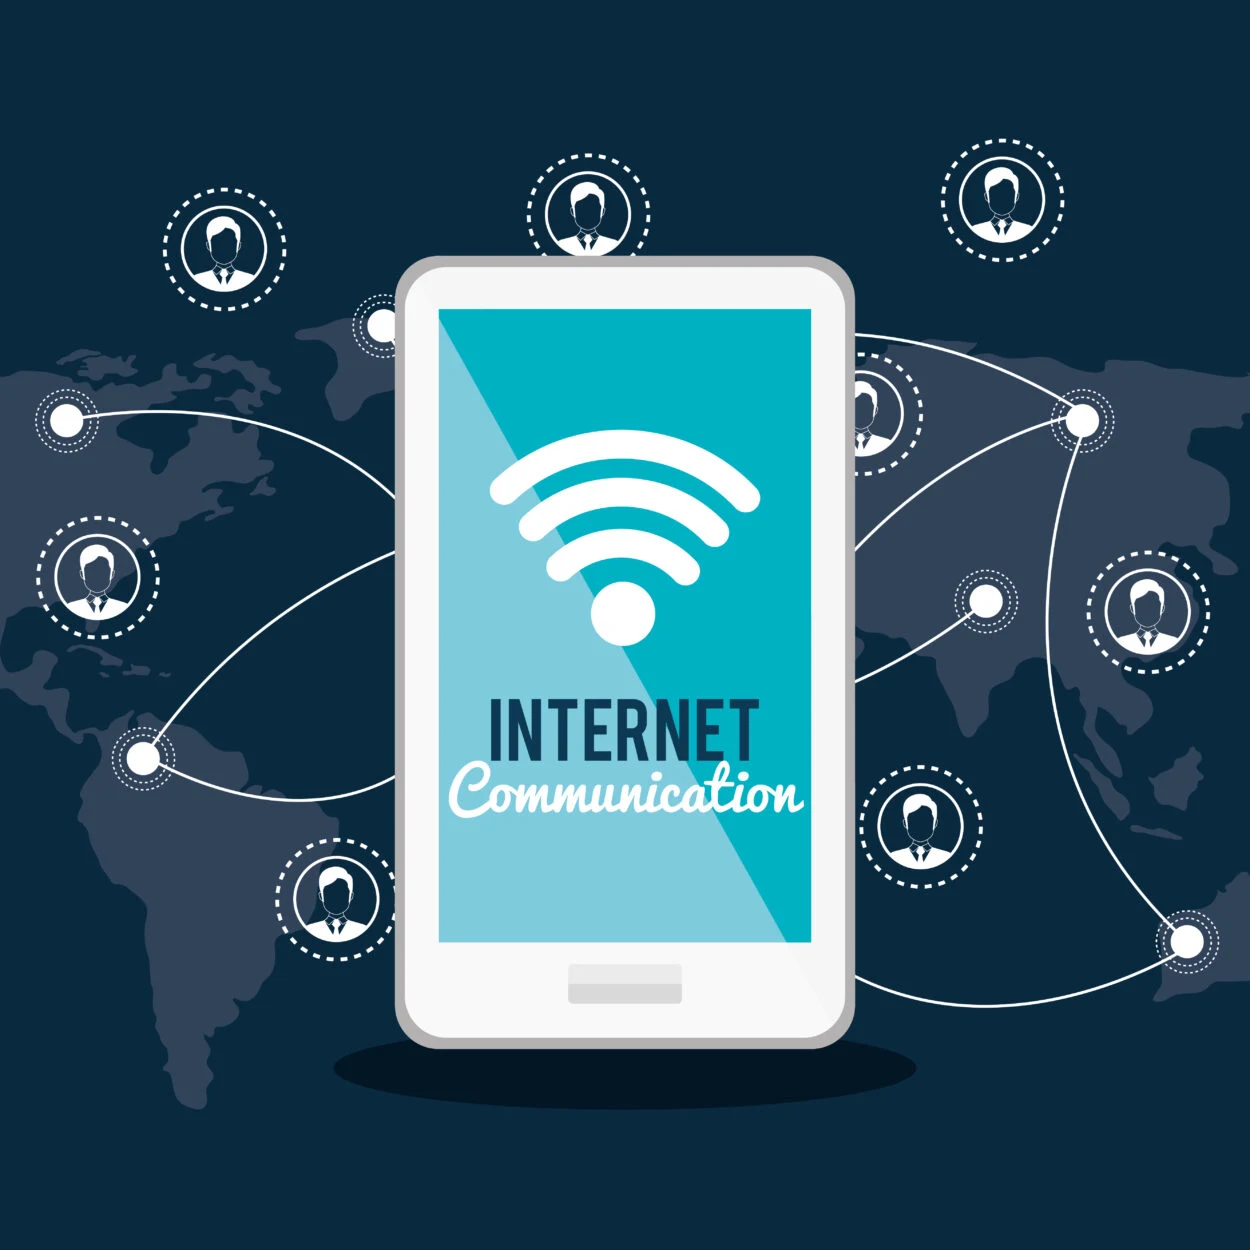 communication through internet across the globe